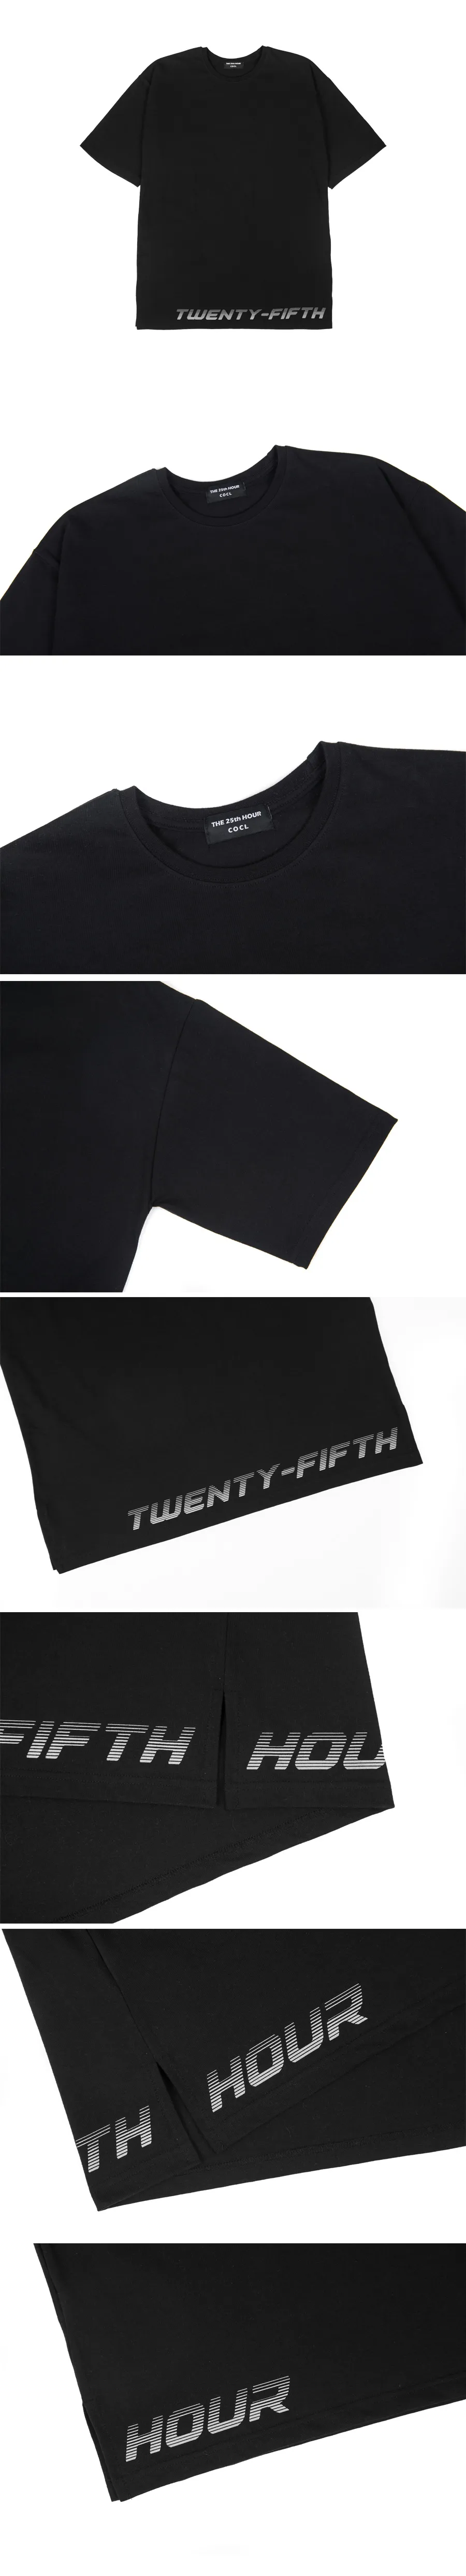 25thレタリング半袖Tシャツ(ブラックホワイト) | 詳細画像5